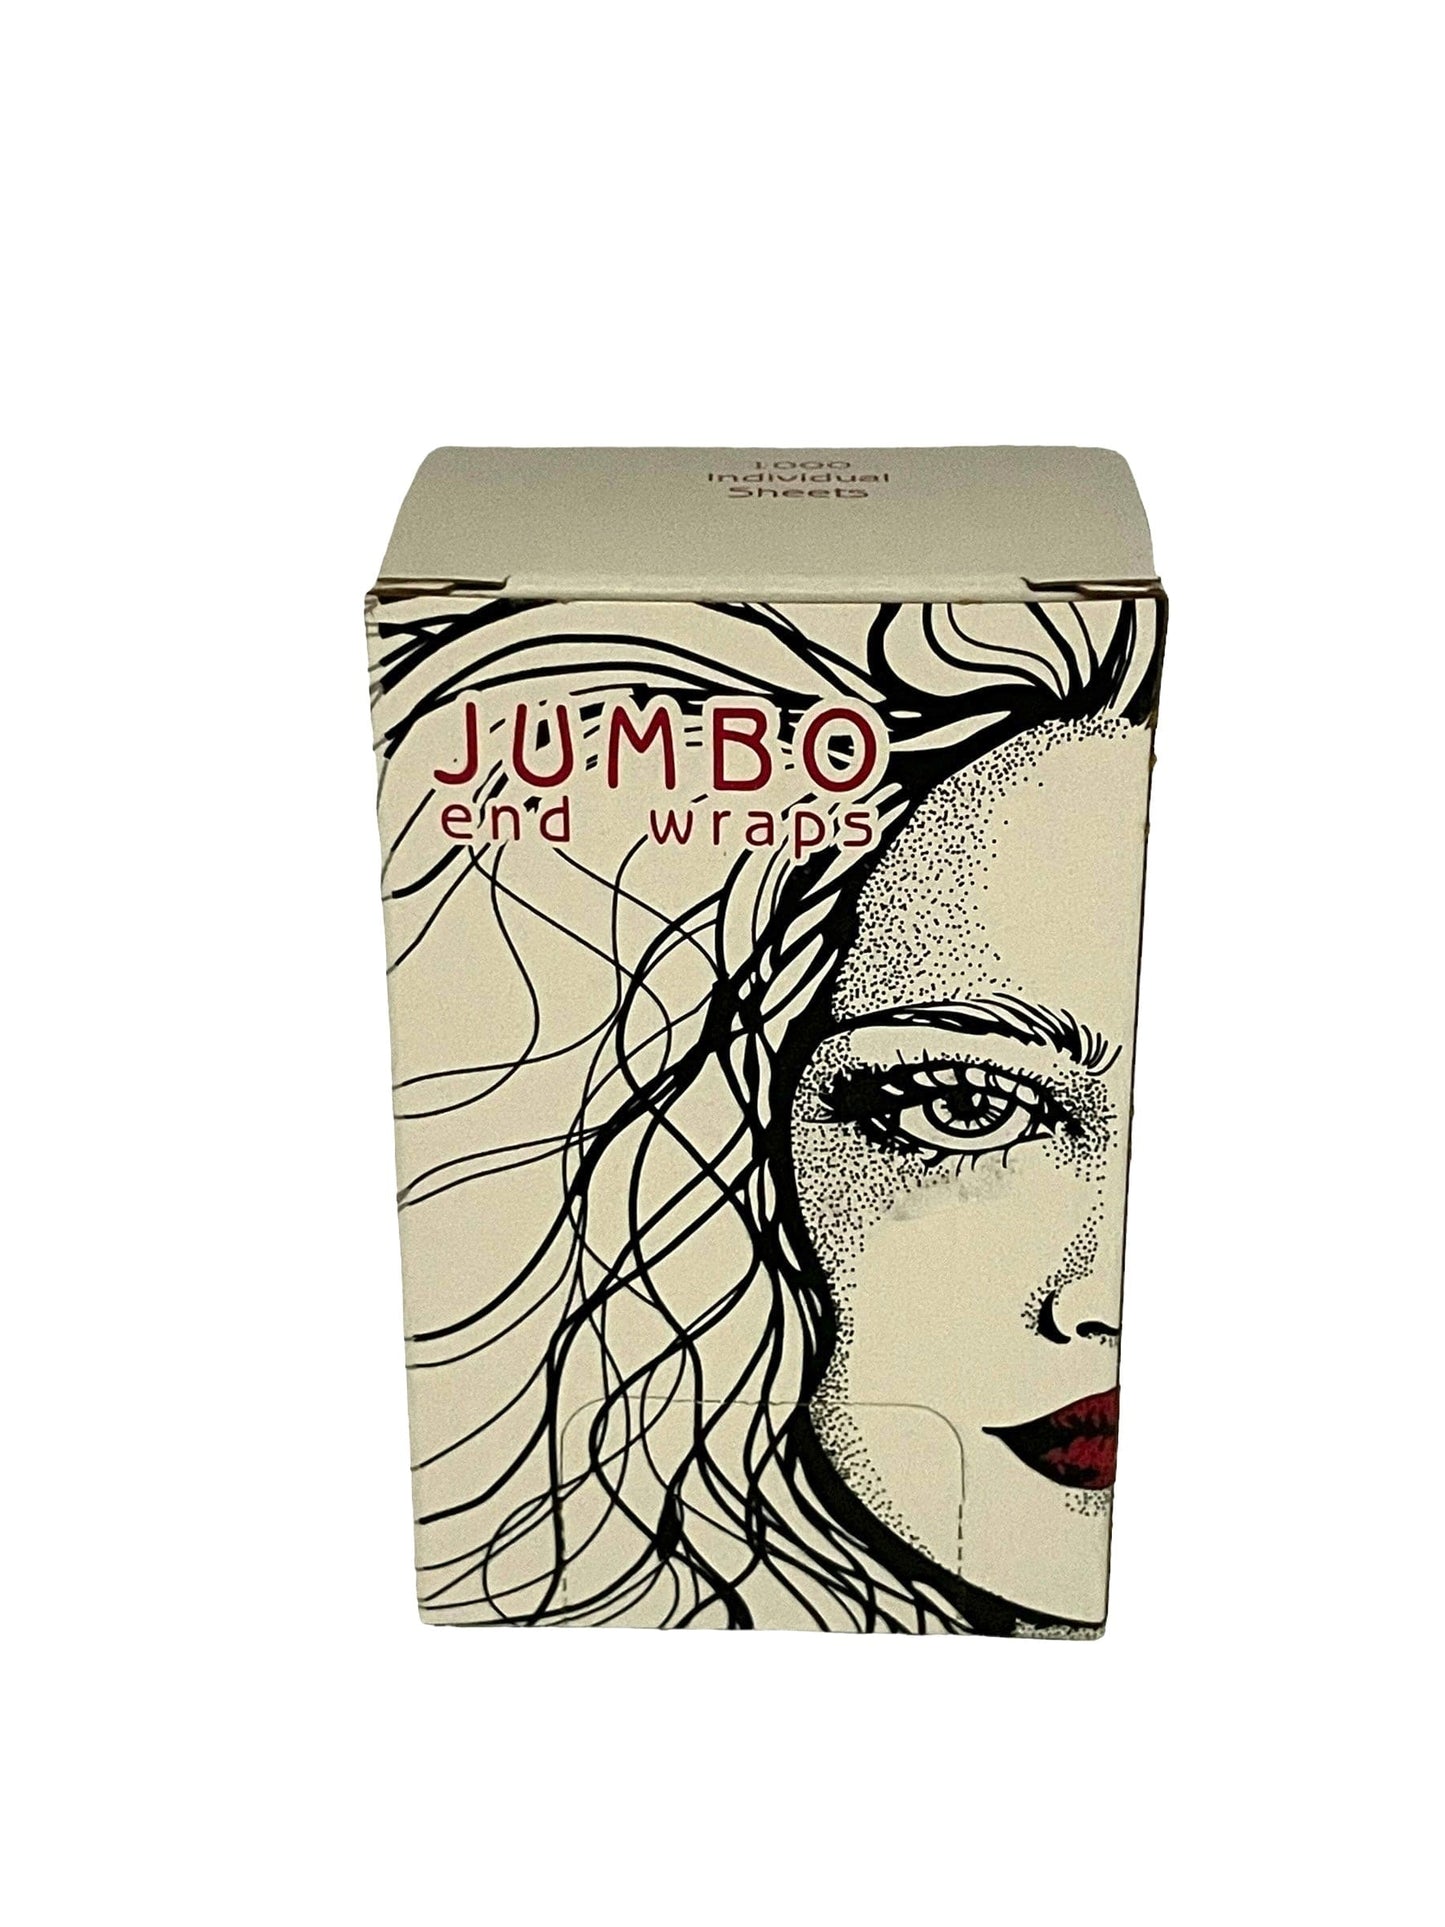 Perm End Wraps Jumbo 2.5” x 4" 1000 Sheets Hair Care